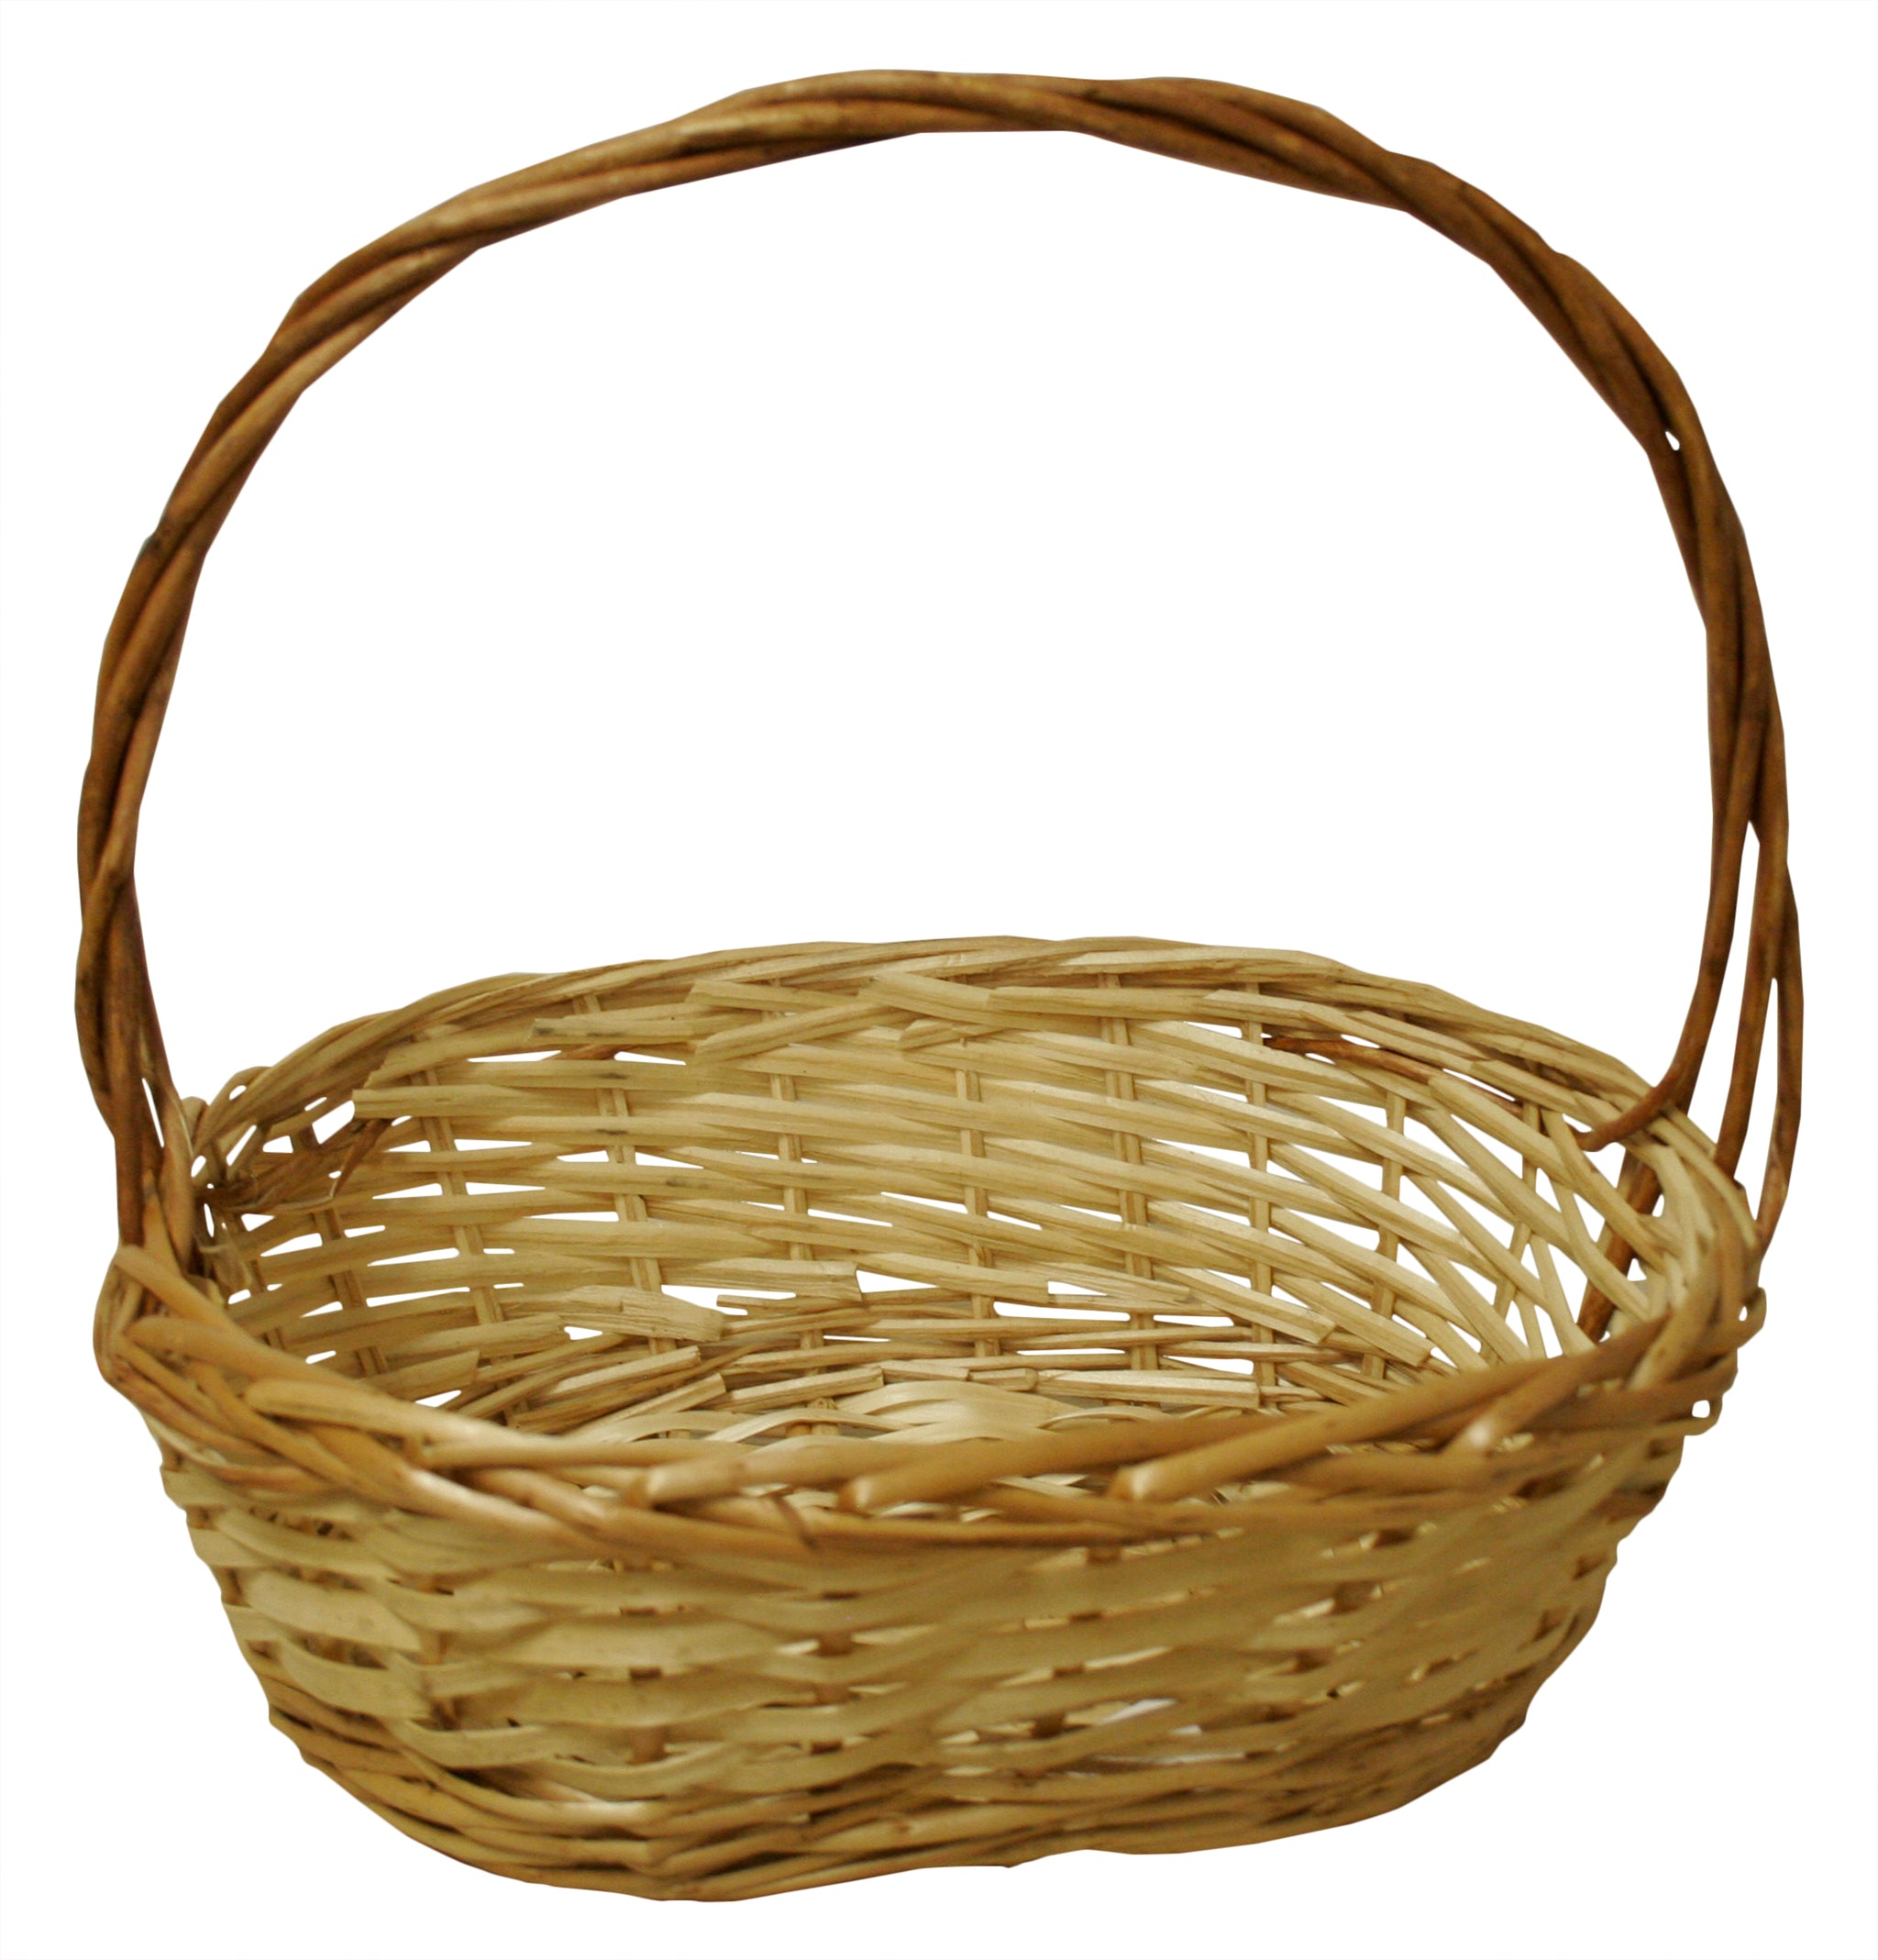 Wicker Basket Gift Baskets Empty Oval Willow Woven Picnic Basket